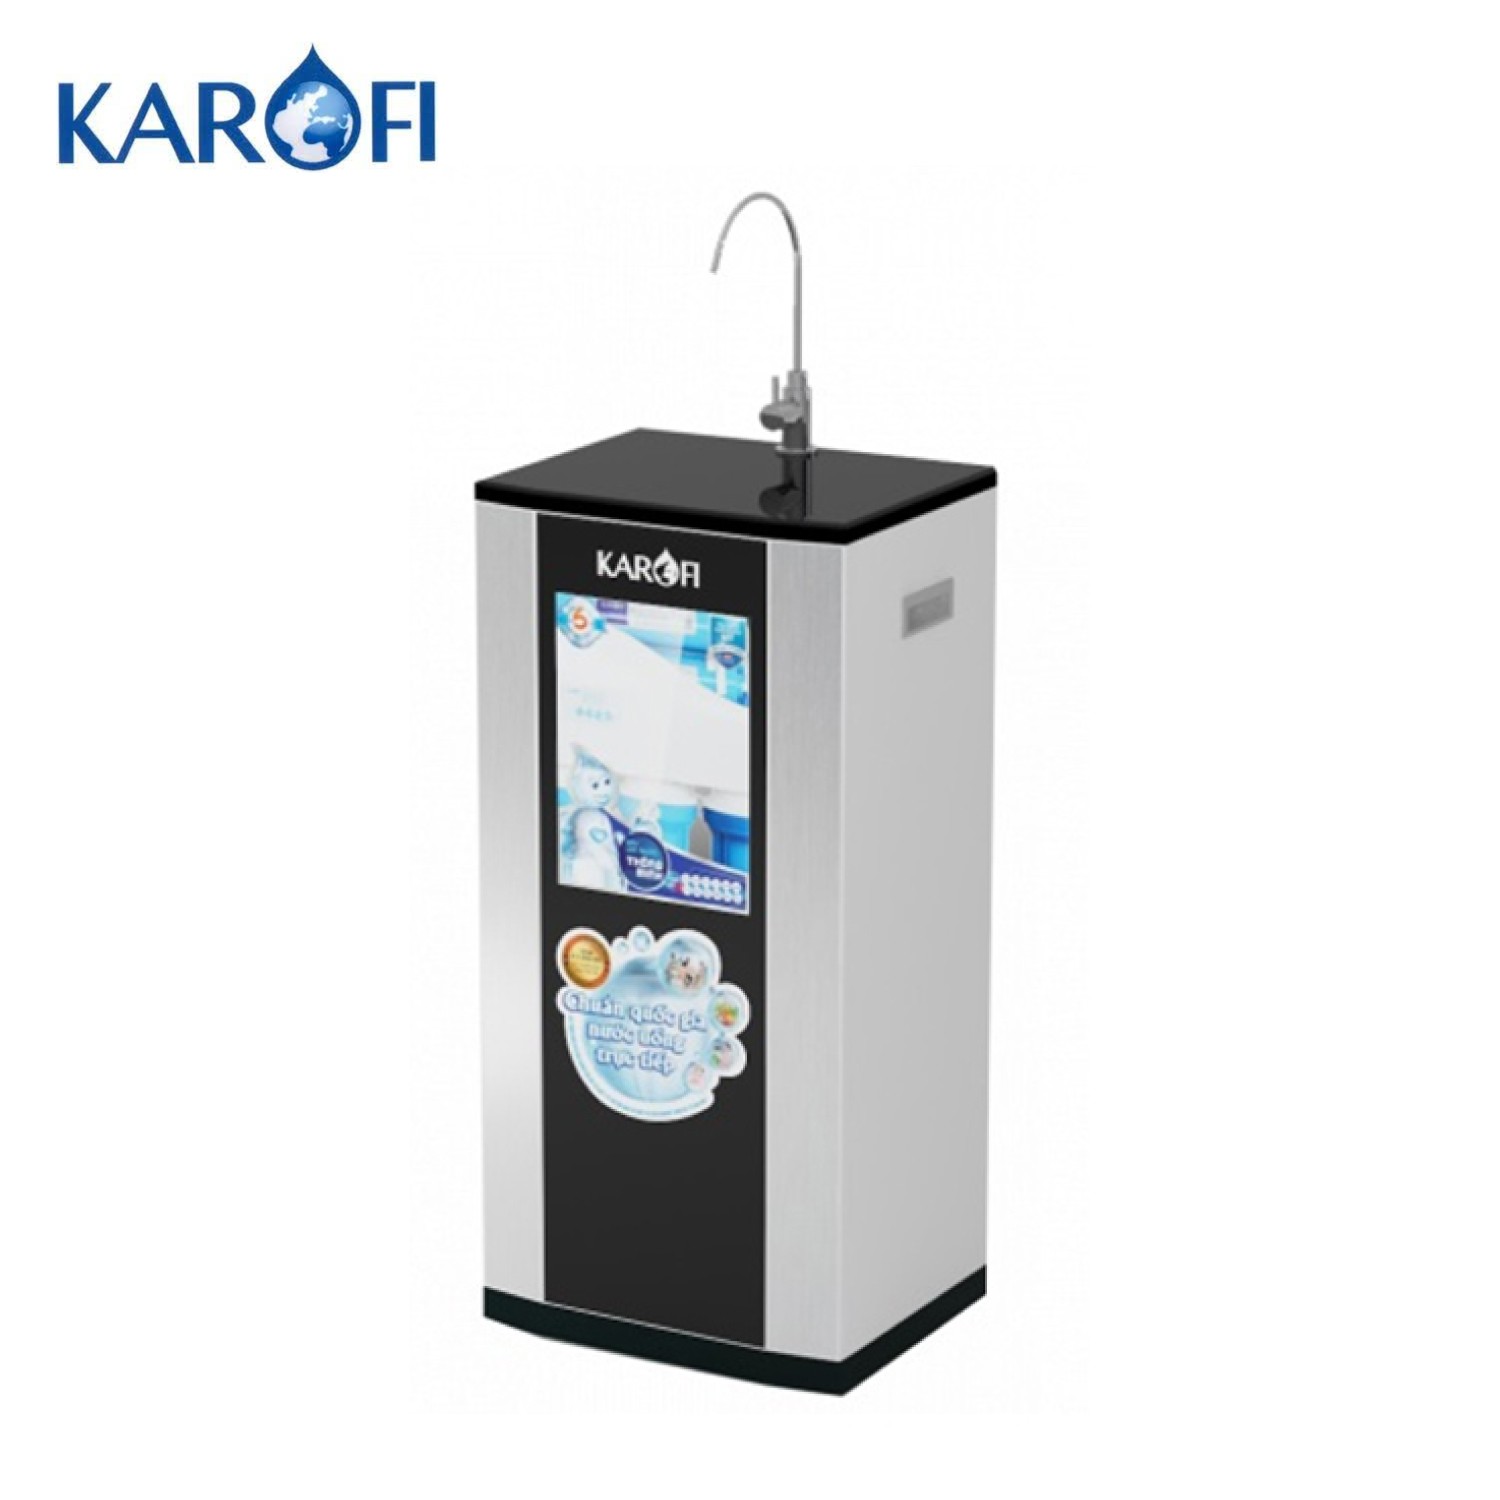 Product Image of KAROFI CABINET 6 Stage 75 Gallon RO Water Purifier